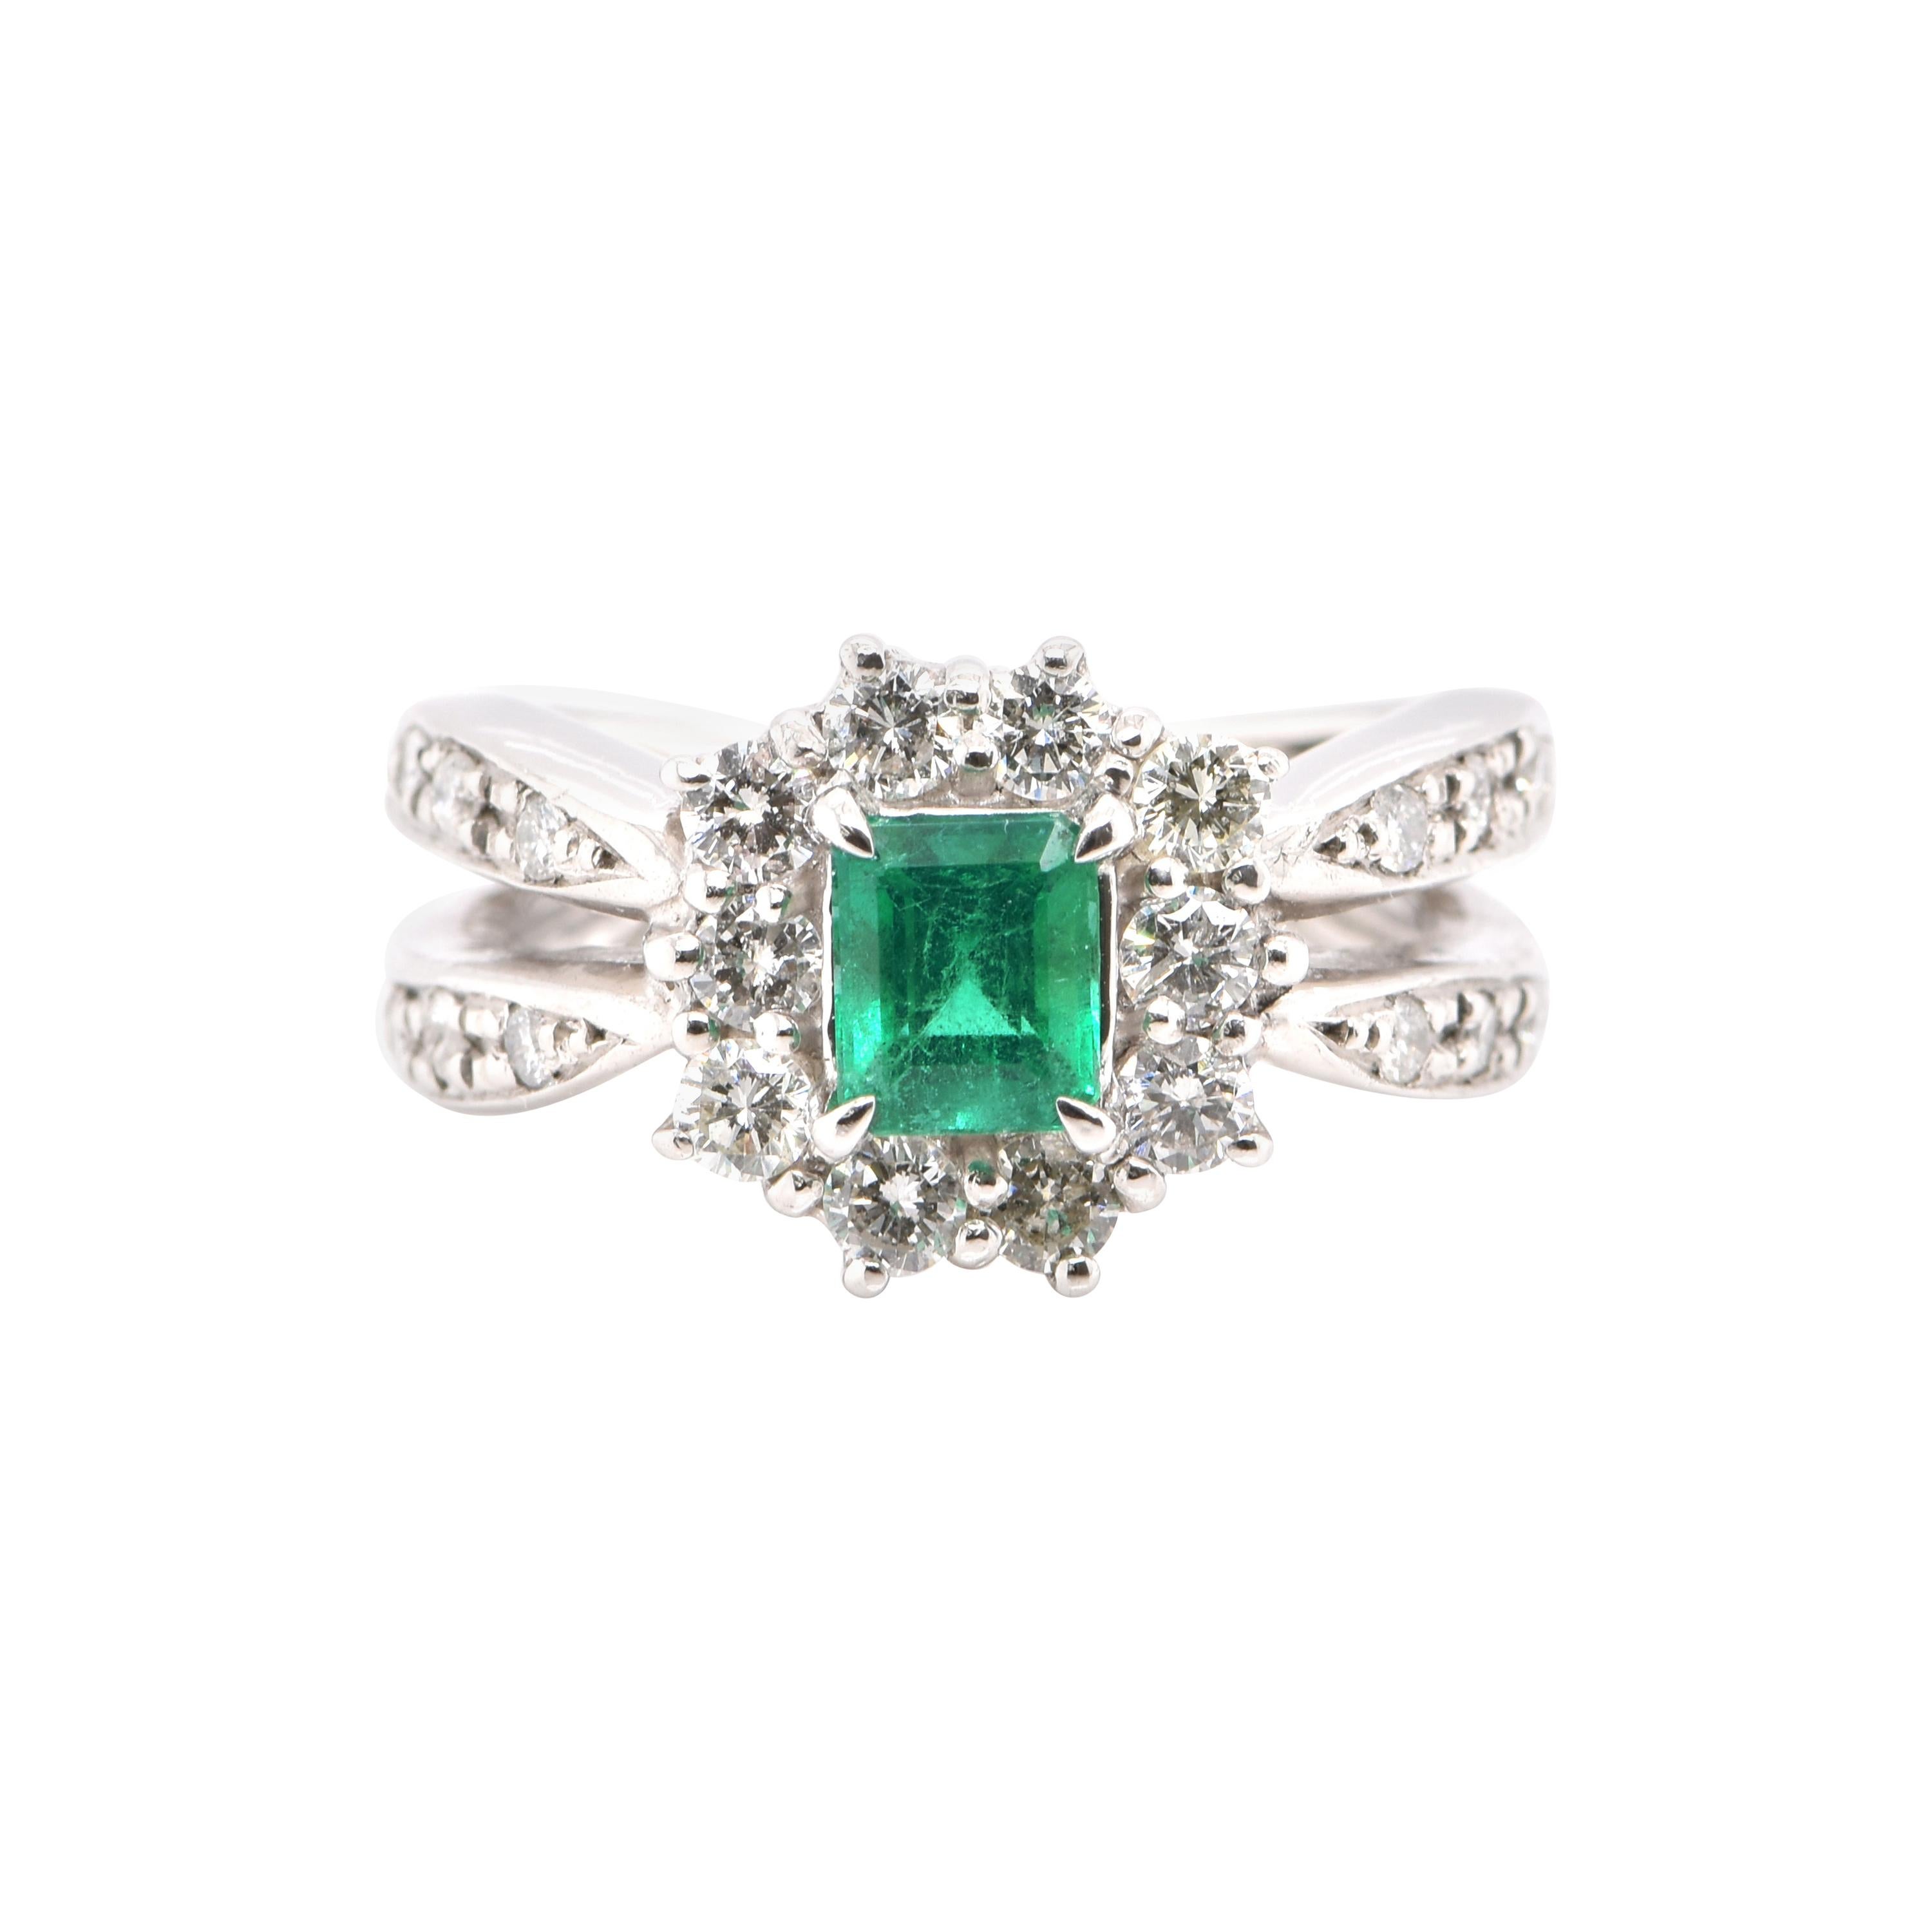 0.69 Carat Natural Emerald and Diamond Ring Set in Platinum